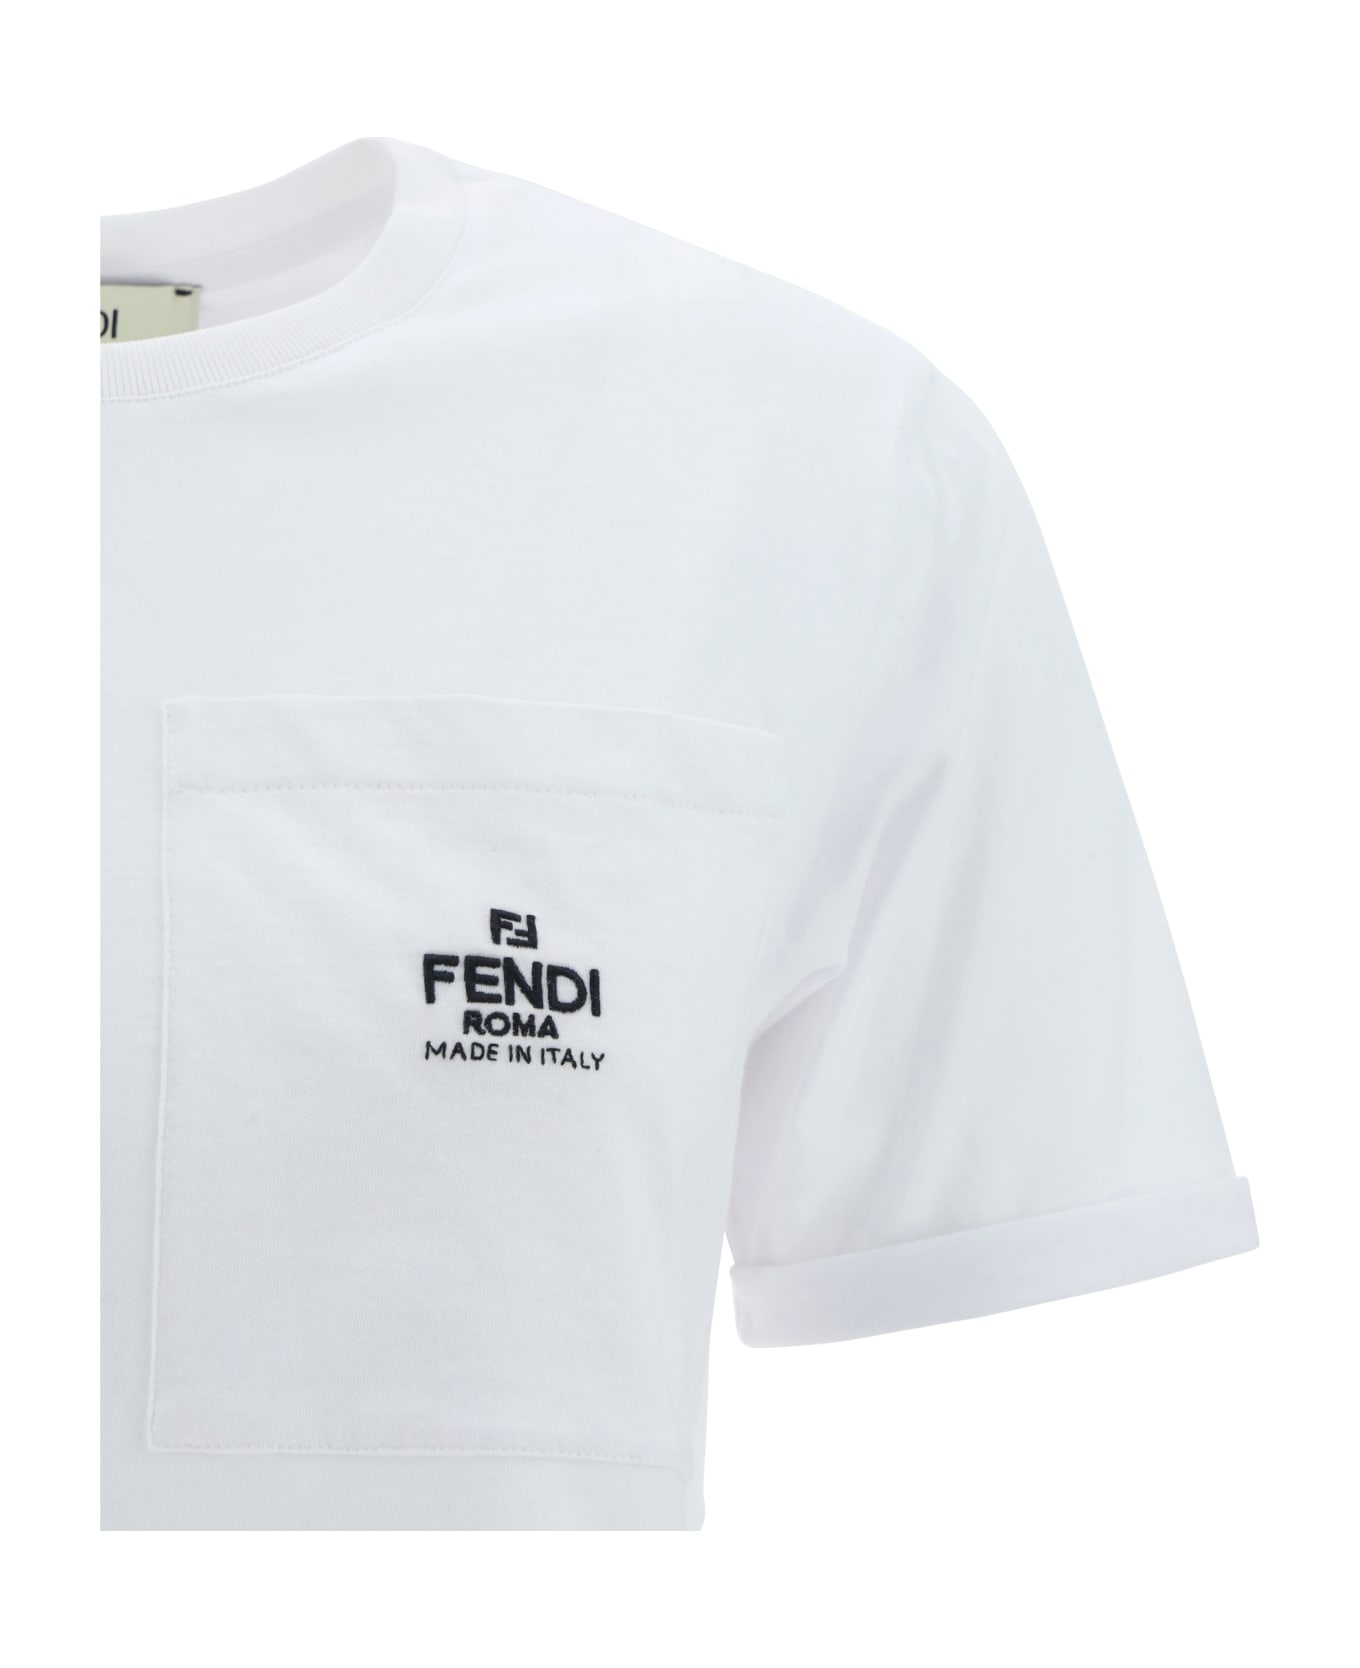 Fendi loafer Logo Embroidered Crewneck T-shirt - White